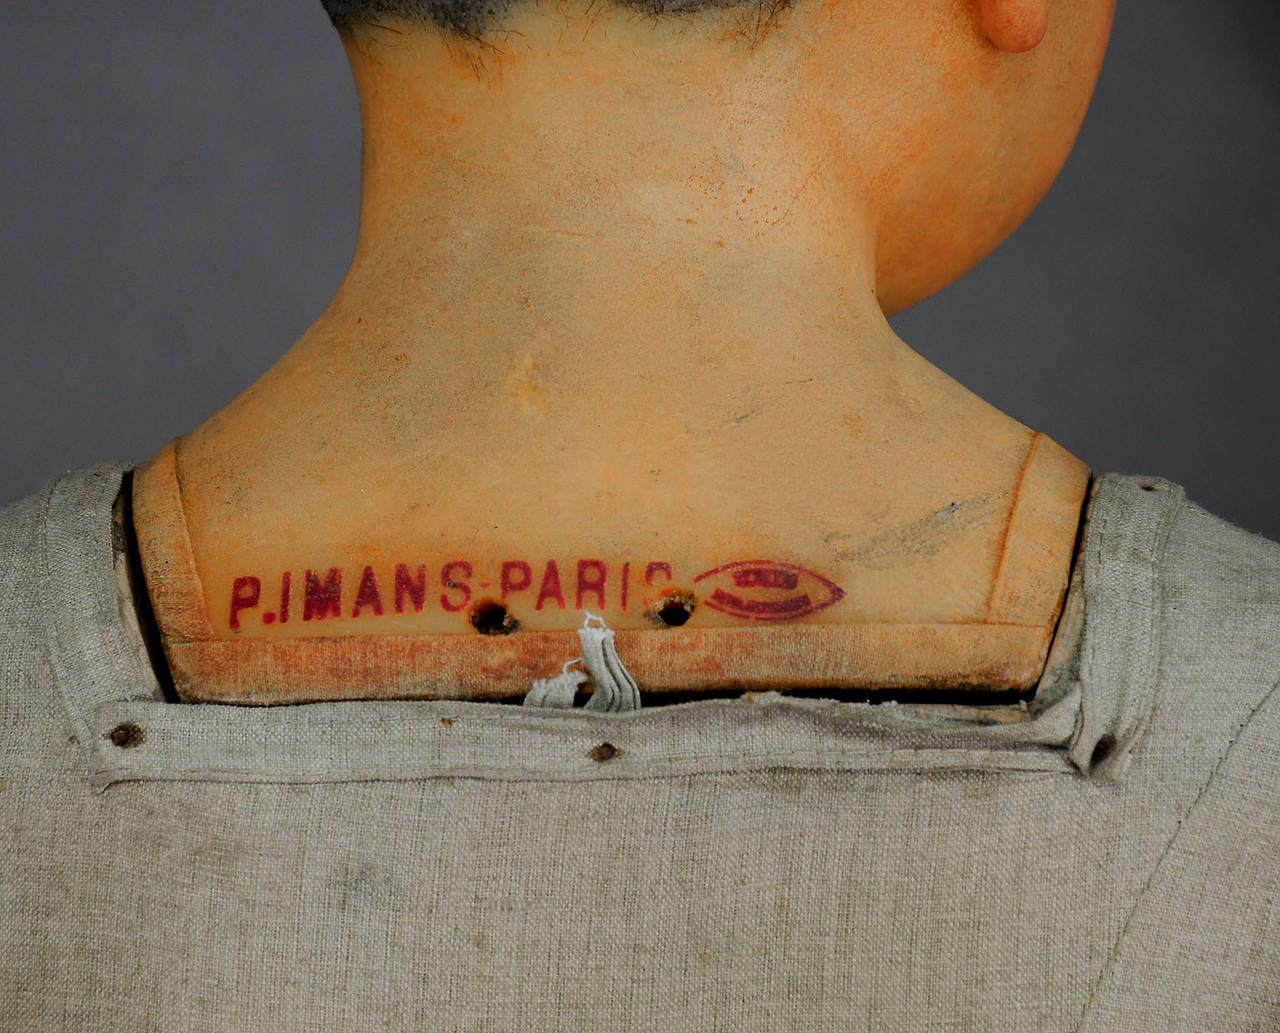 European Wax Head Mannequin by Pierre Imans, Paris